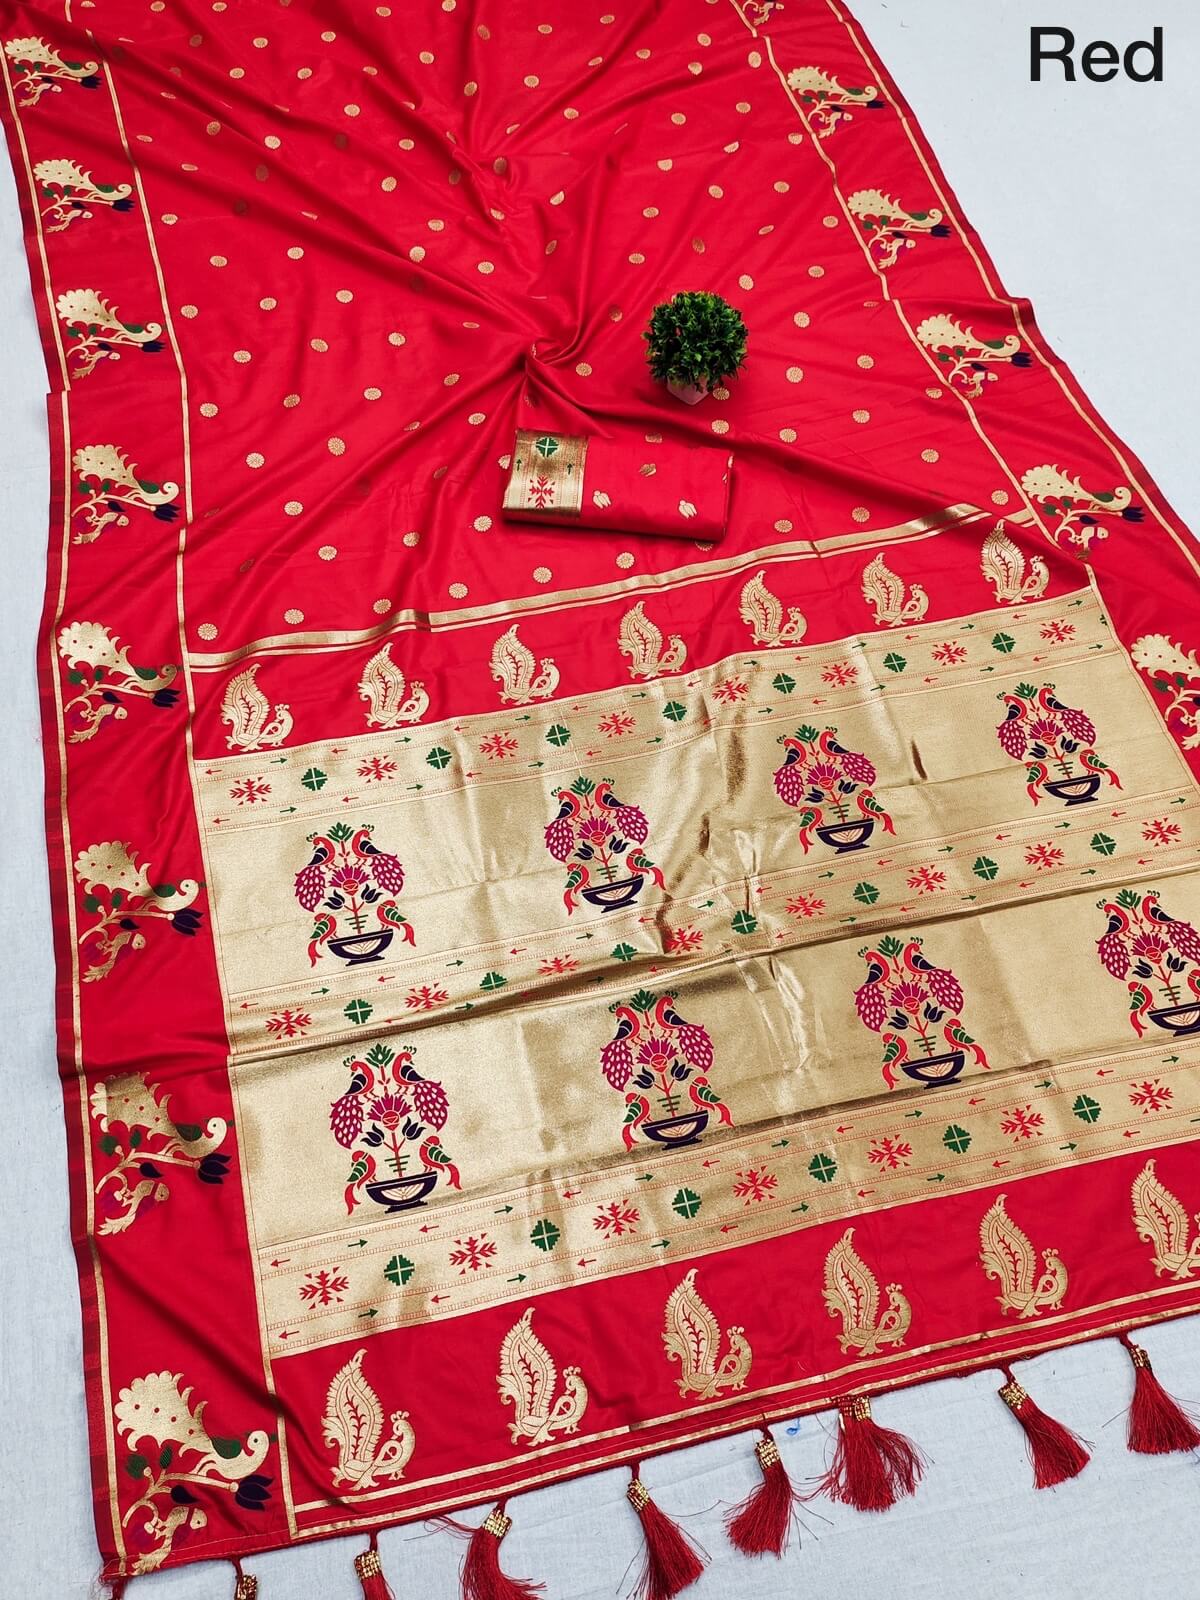 red hot sari for bride and bridesmaid